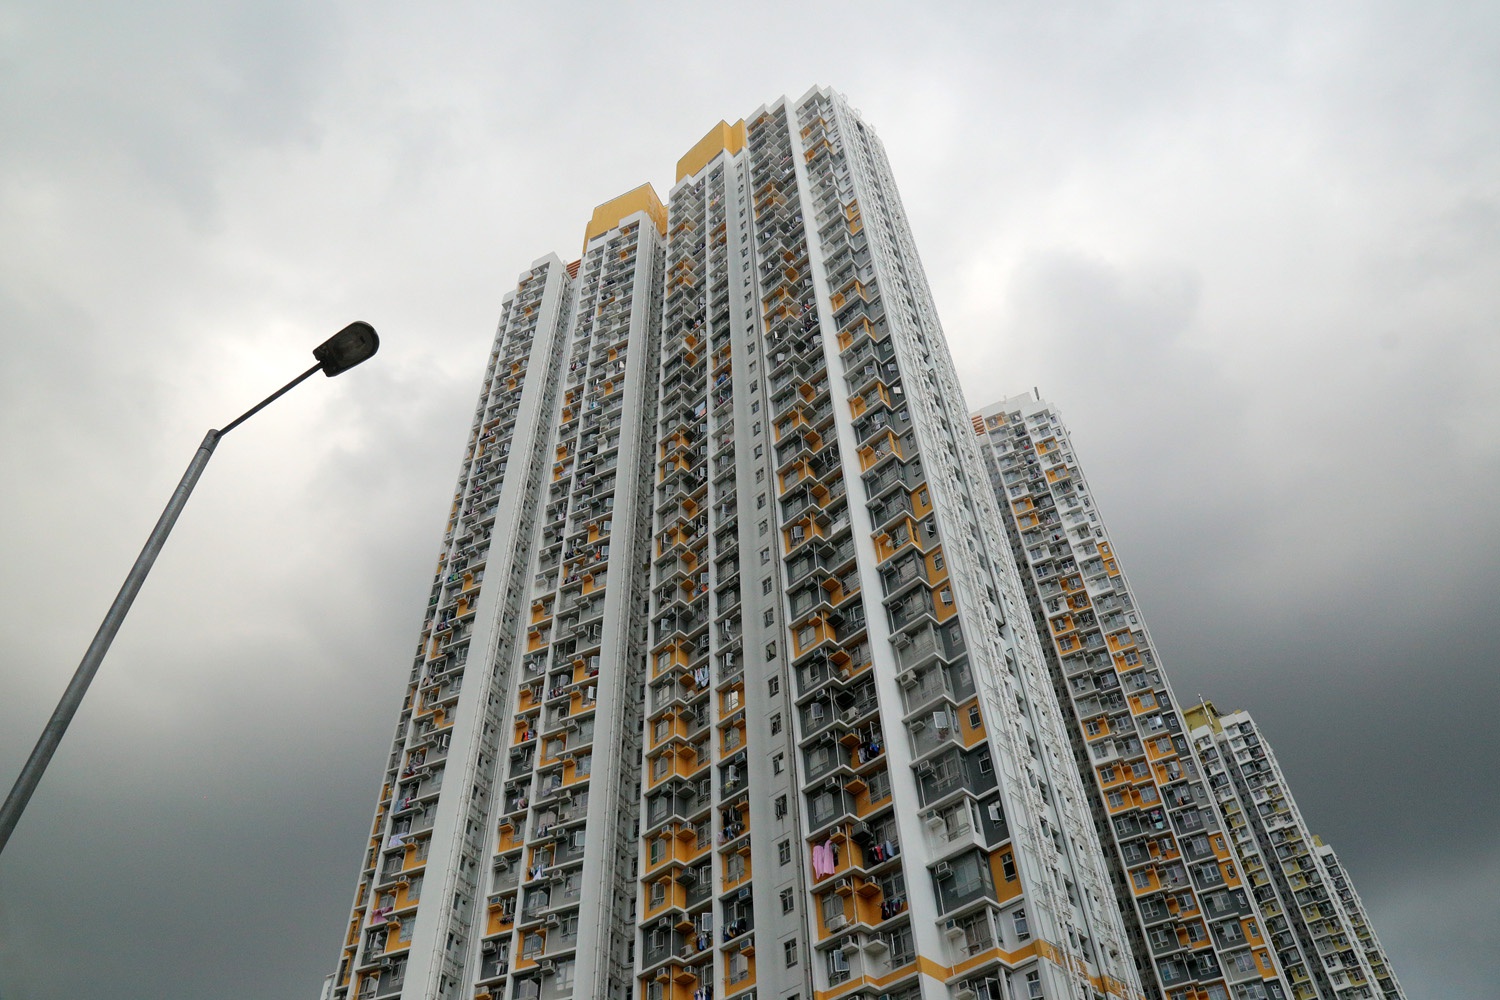 bill-hocker-housing-estate-shek-kip-mei-kowloon-hong-kong-2017